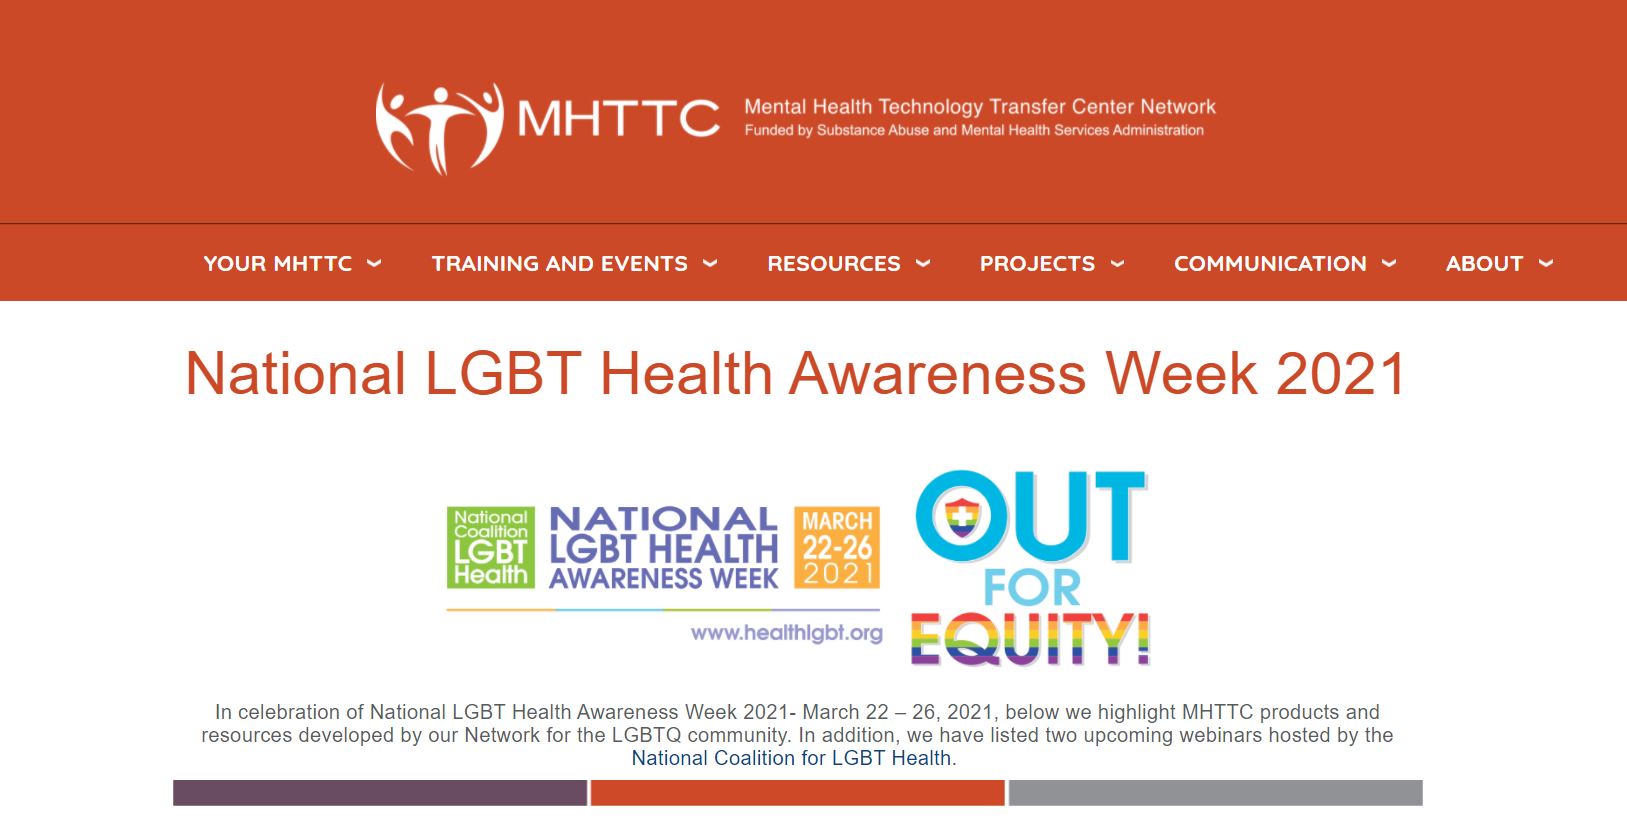 MHTTC: National LGBT Health Awareness Week 2021